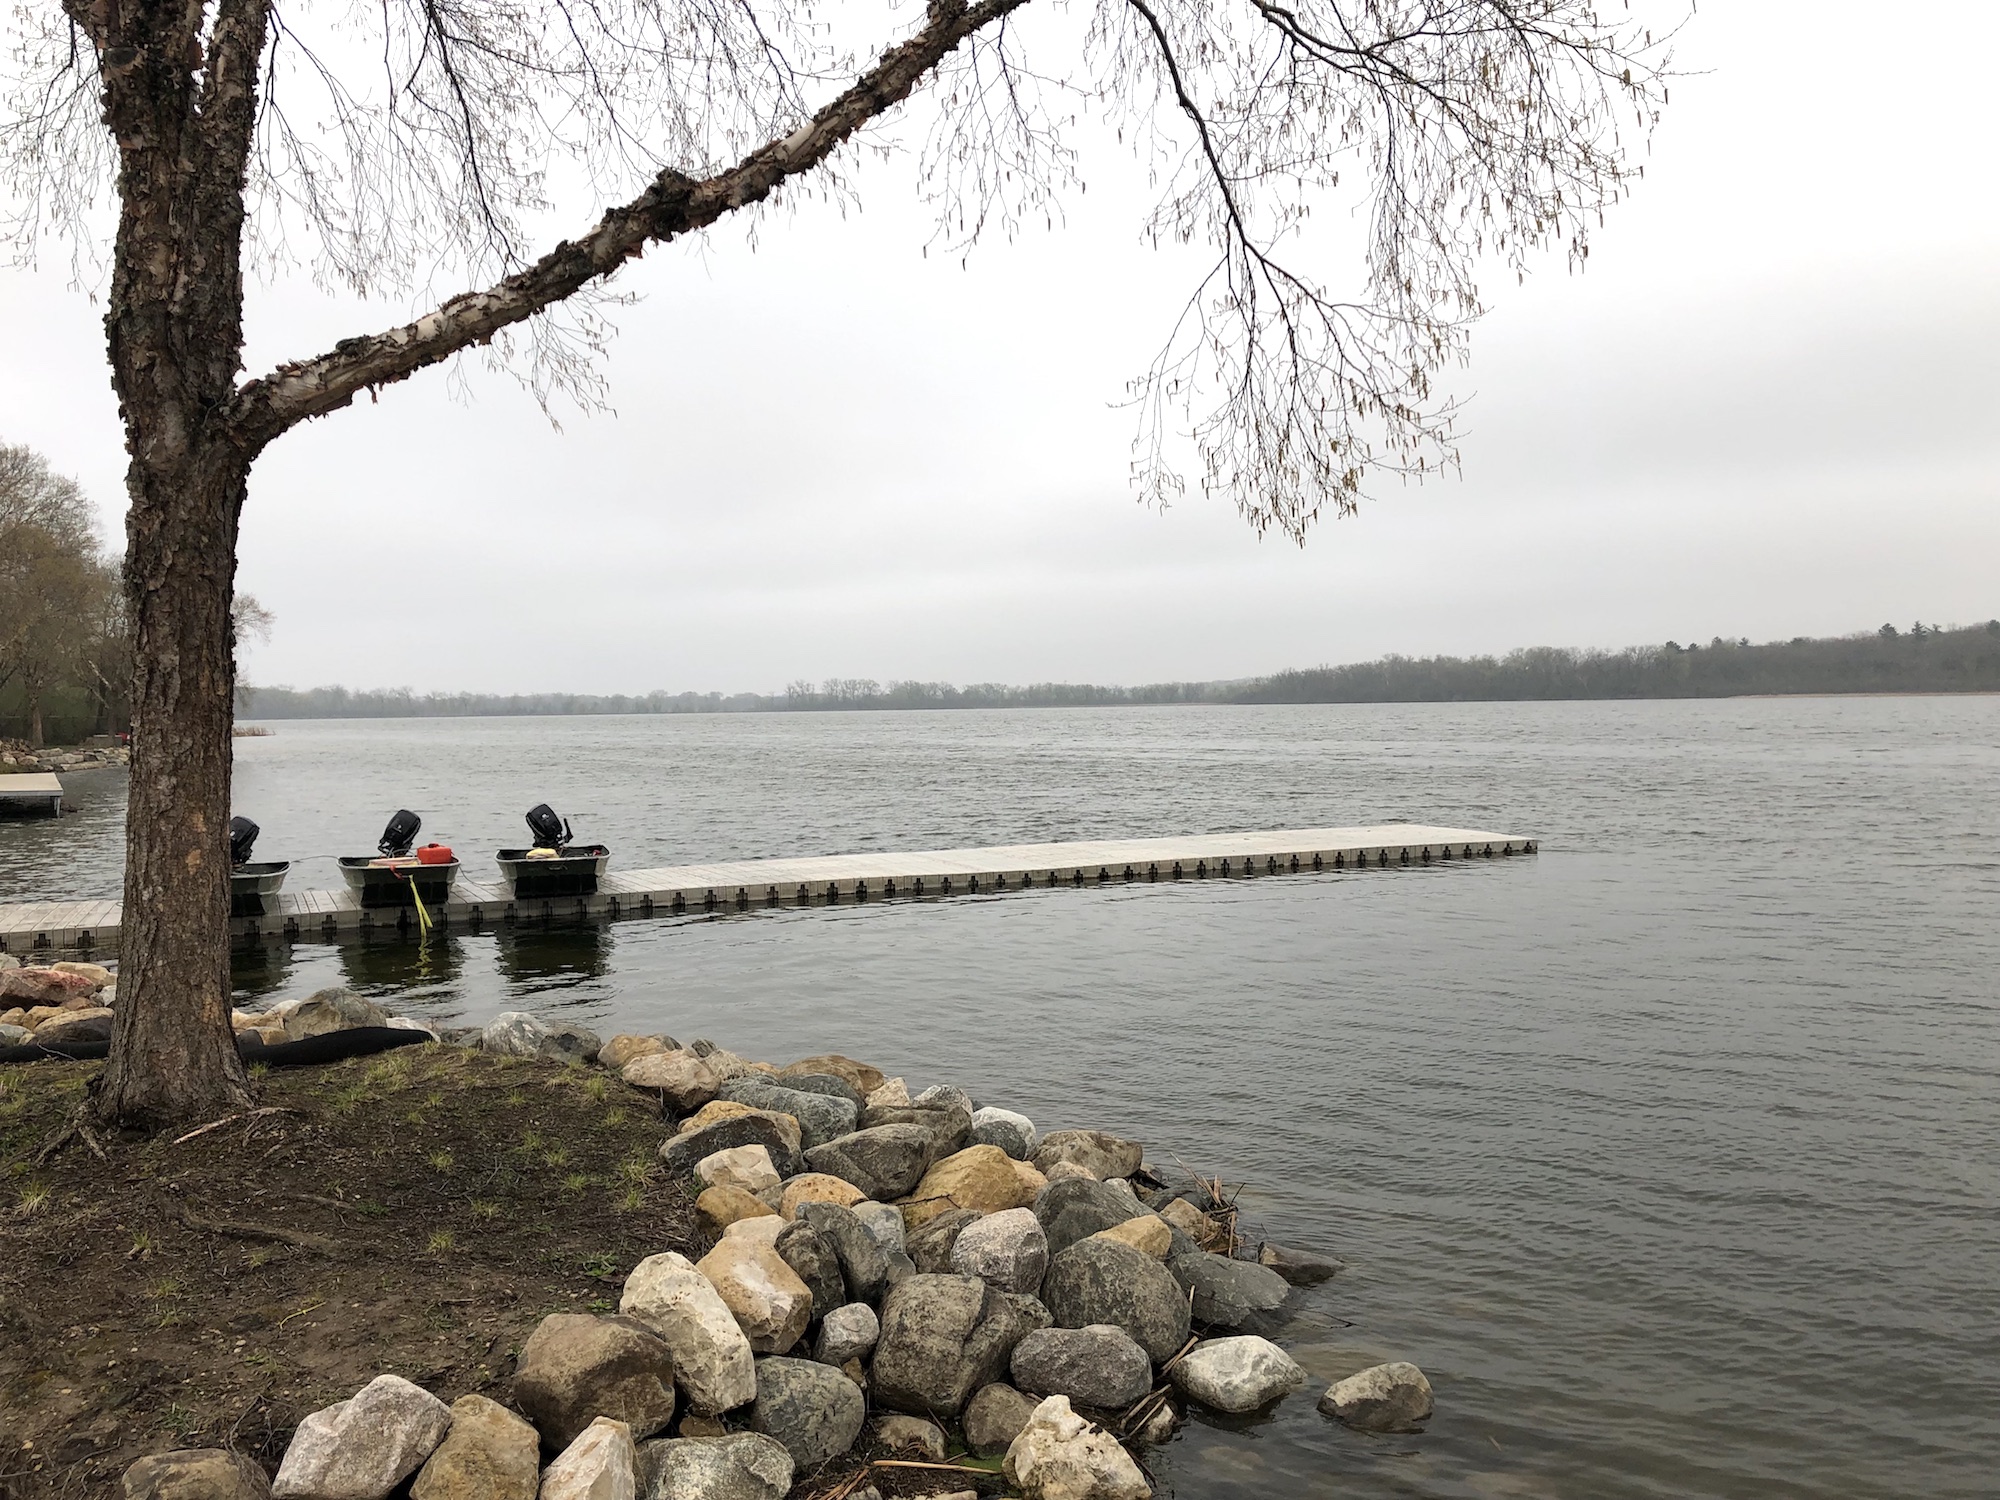 Lake Wingra on April 30, 2019.